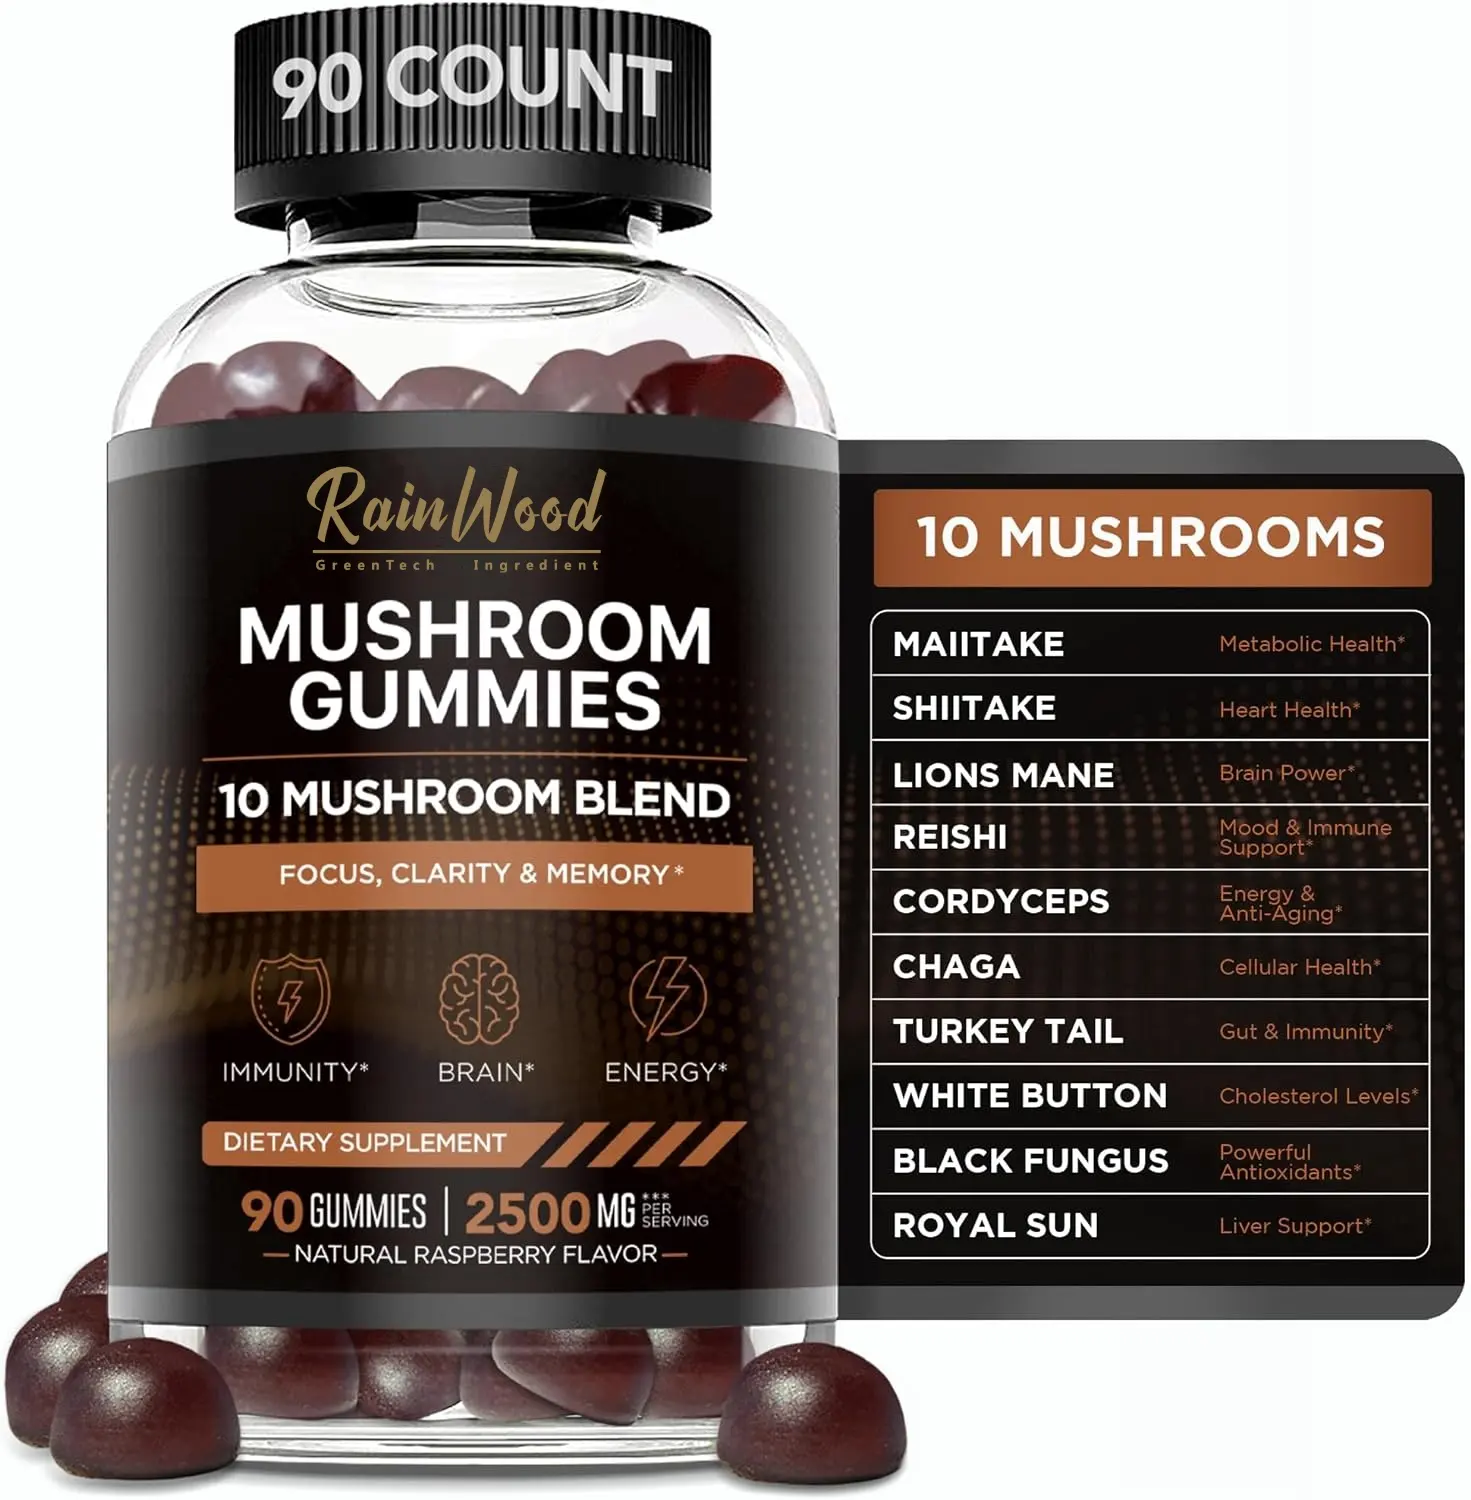 Rainwood jamur Gummies Label pribadi jamur Gummy kemasan jamur Gummies